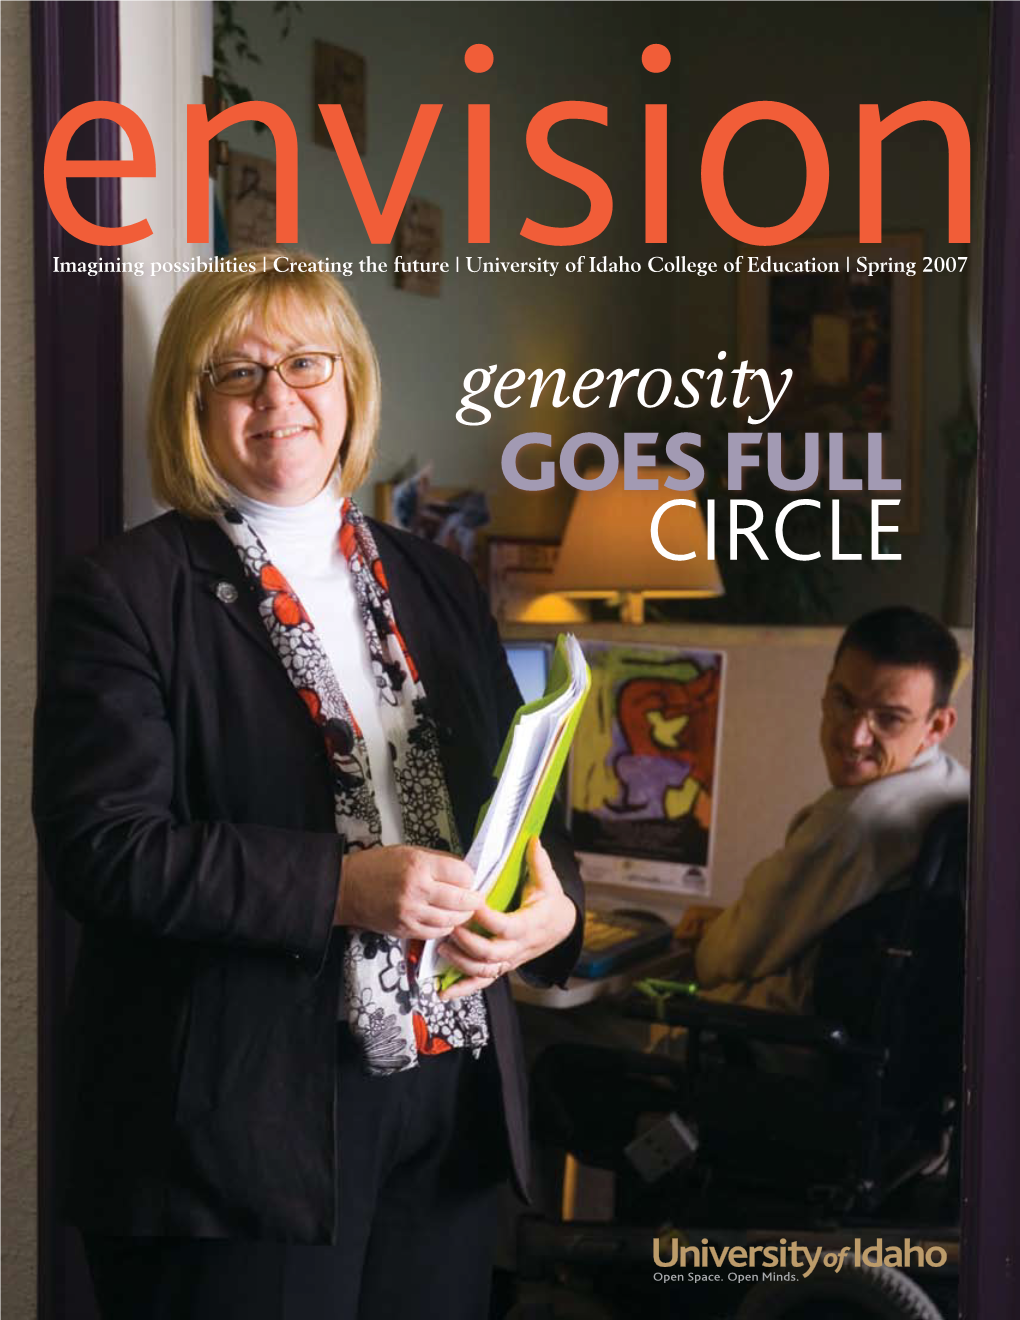 Circle Full Circle: Education Students Find Ways to Give Generosityback Goes Full Circle